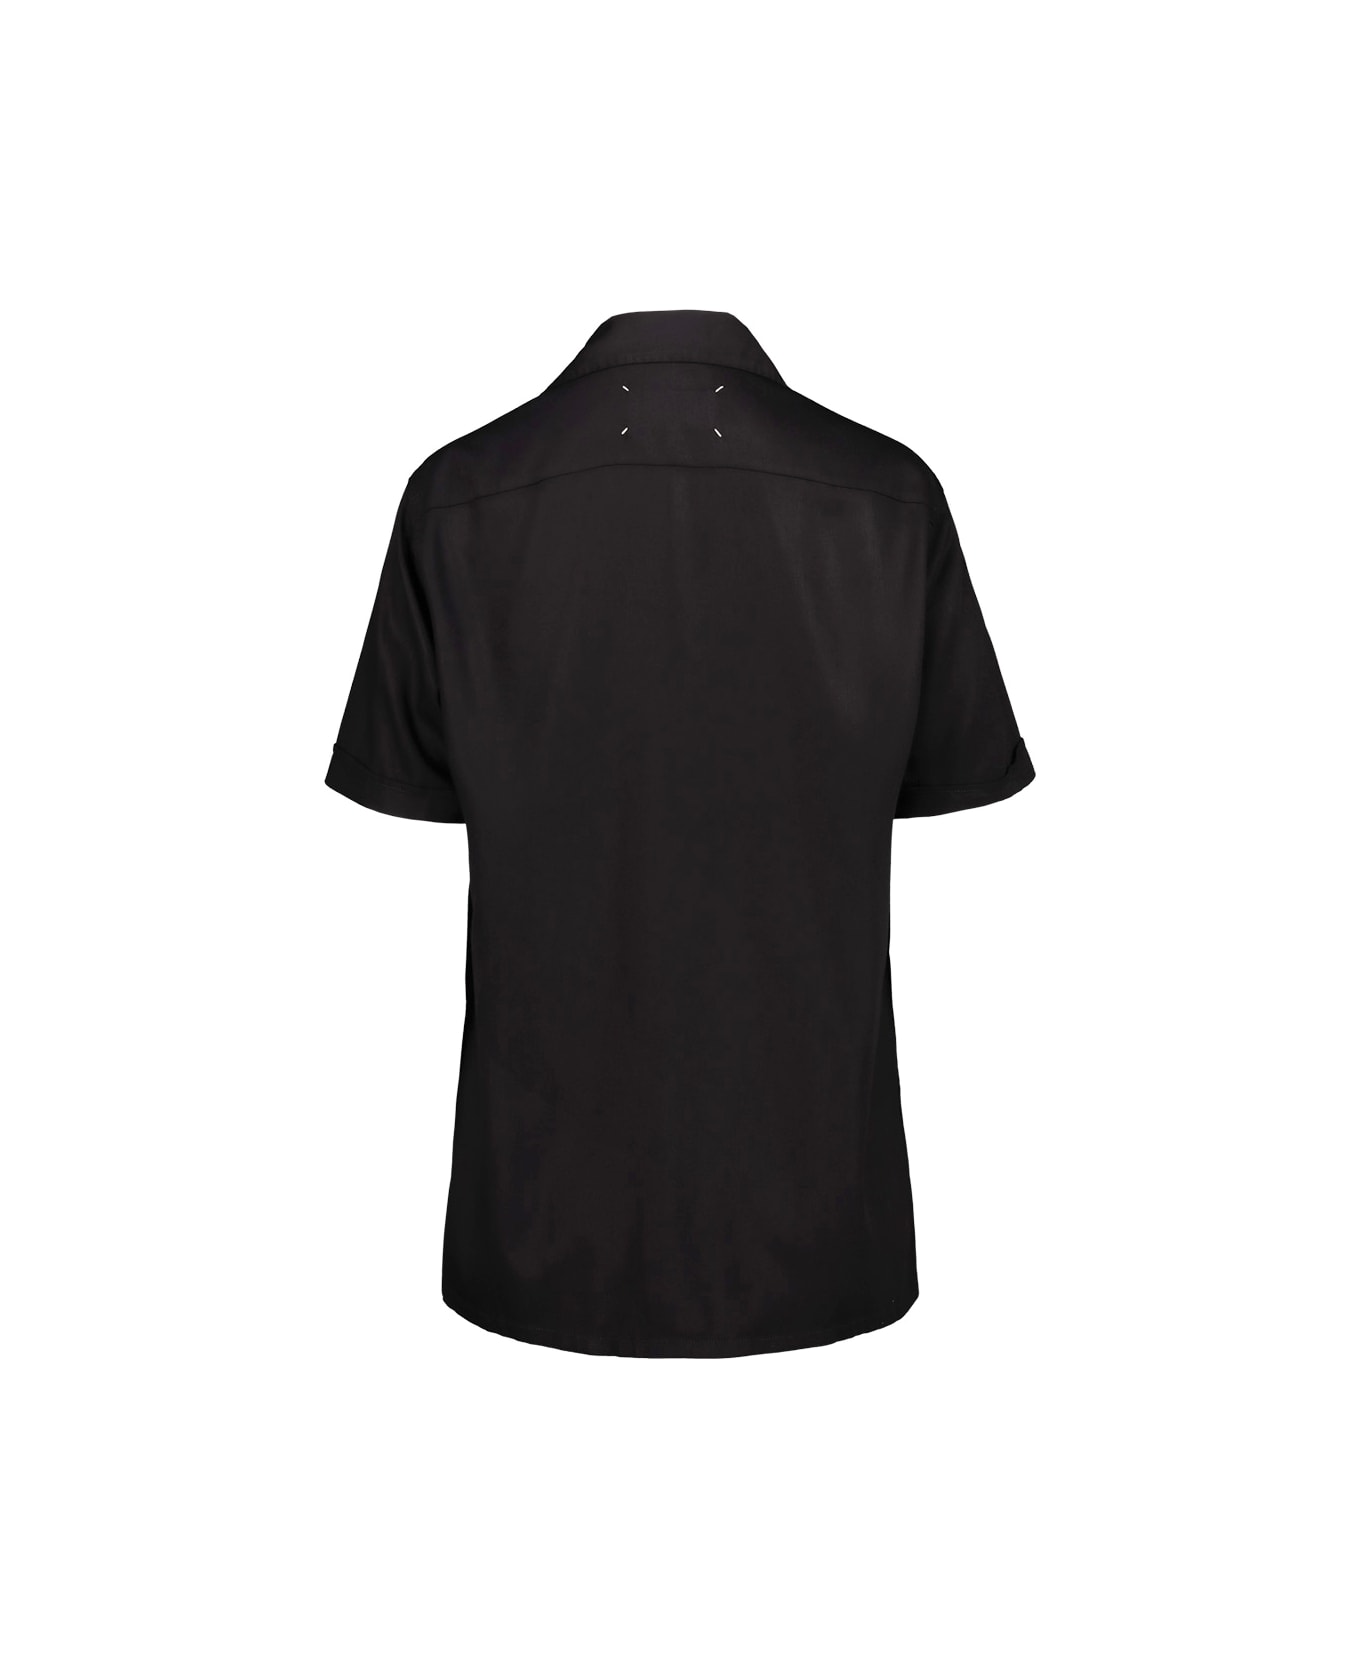 Maison Margiela 'c' Shirt - Black シャツ